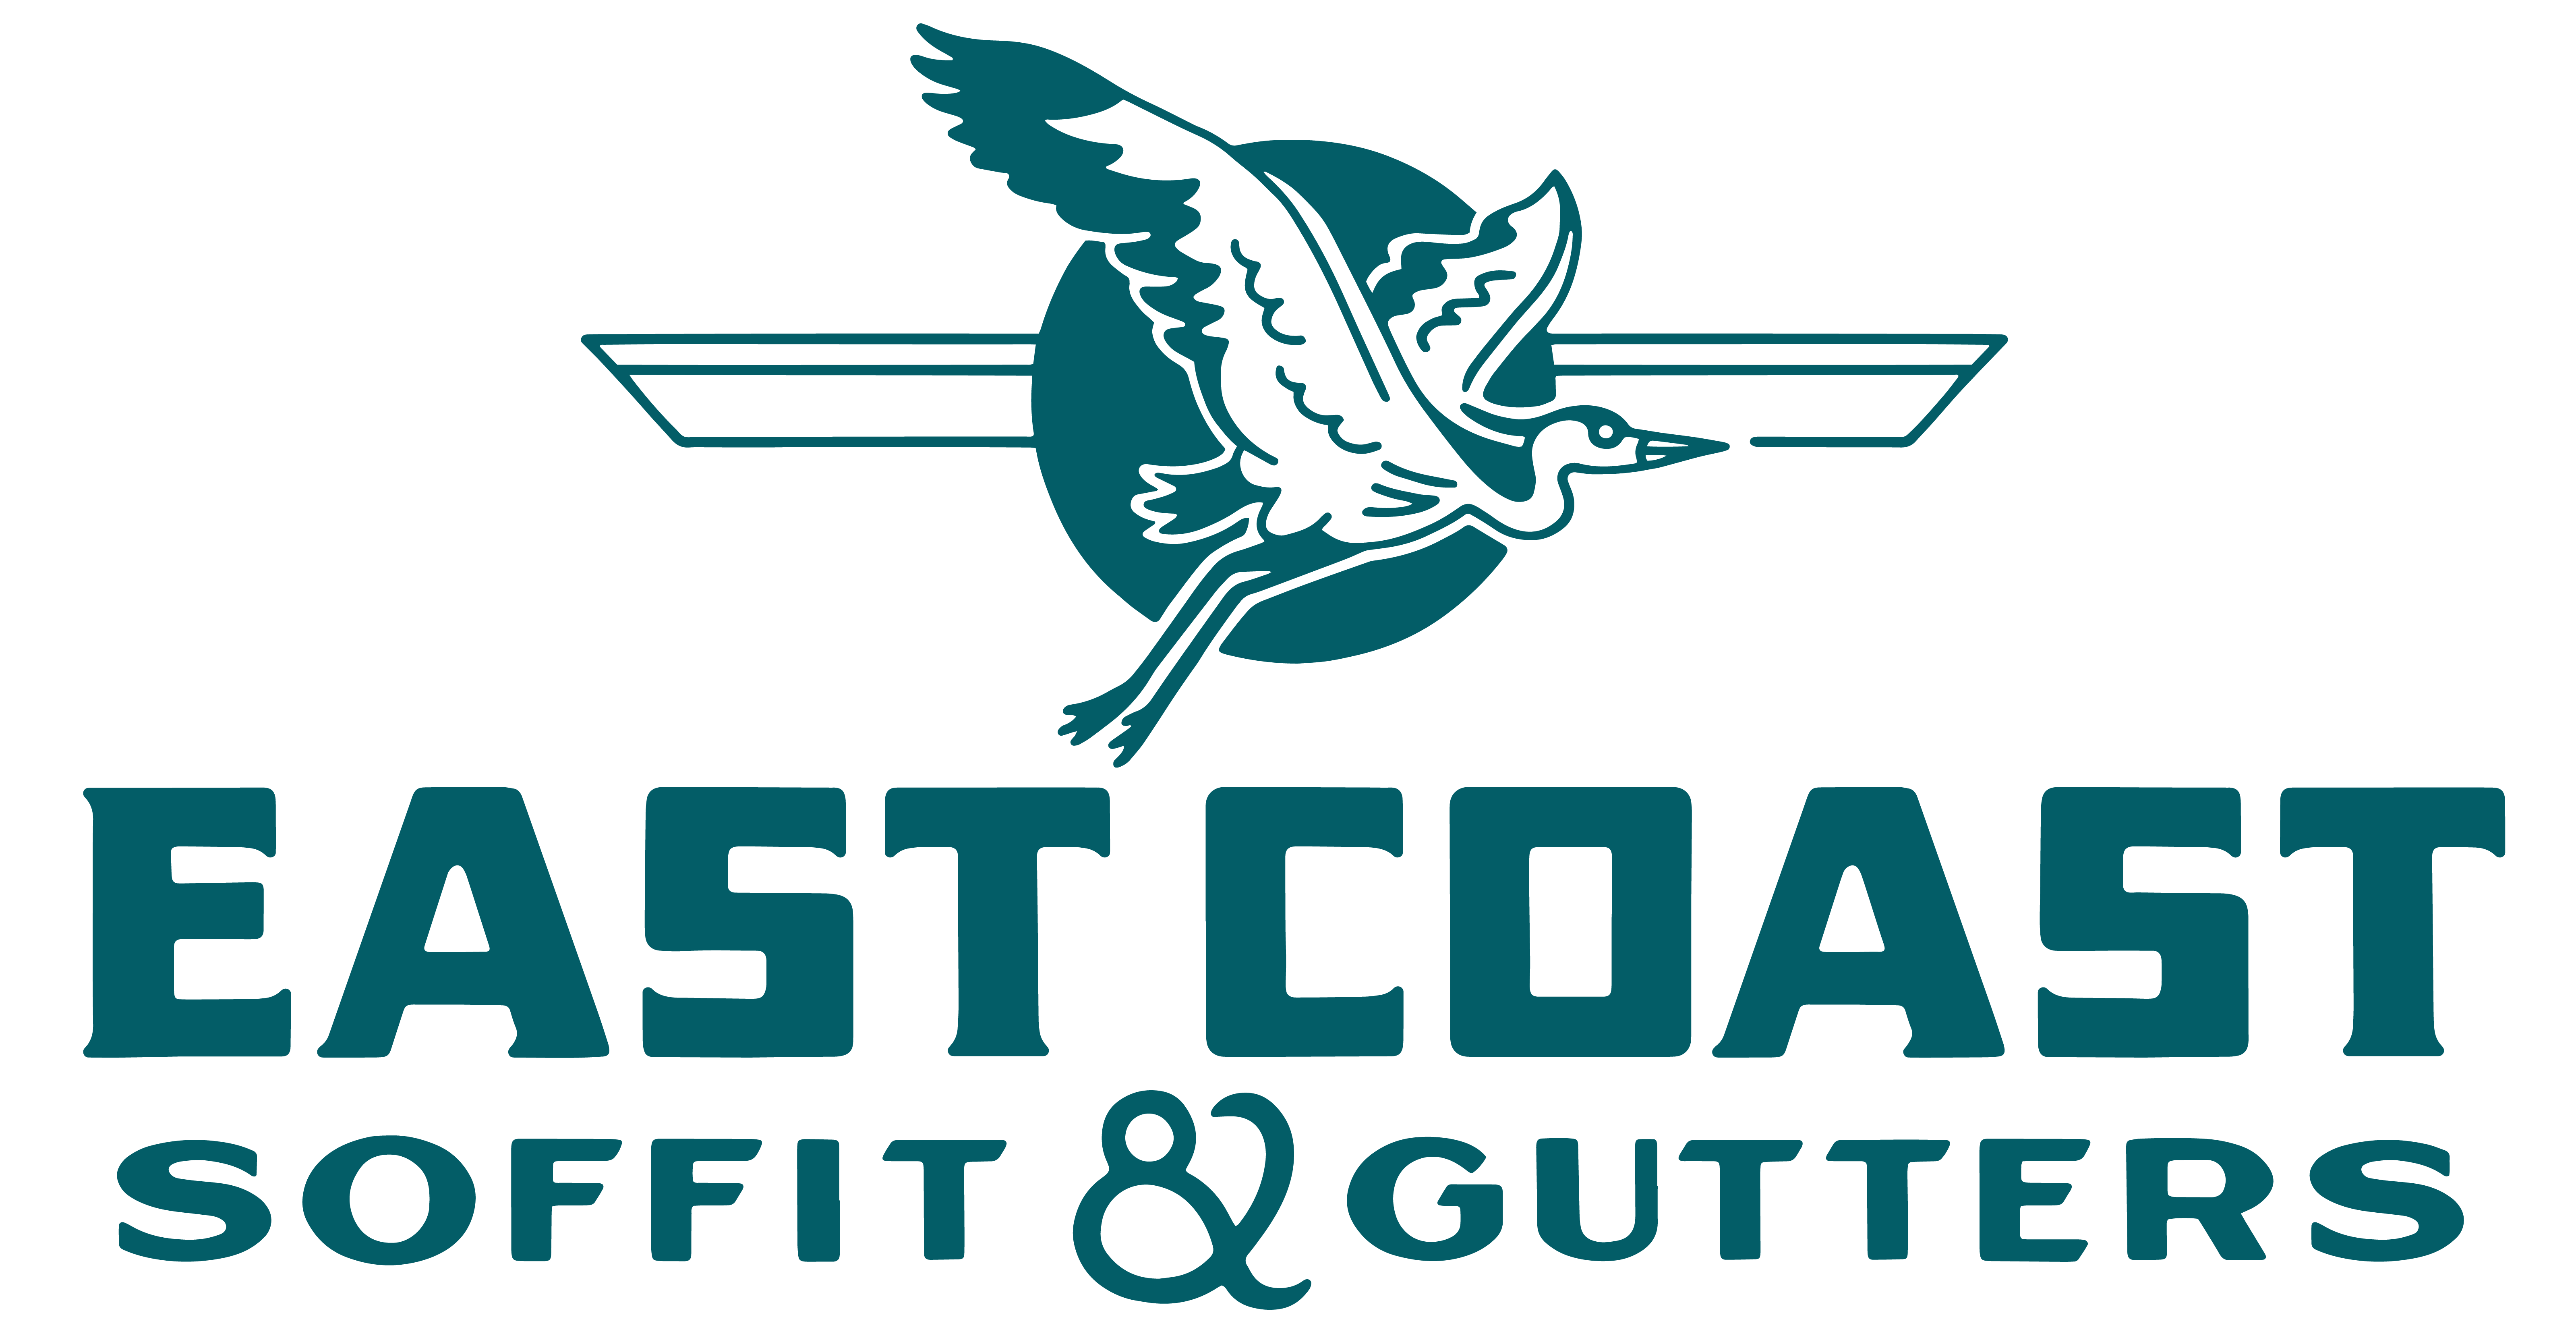 East Coast Soffit & Gutters logo